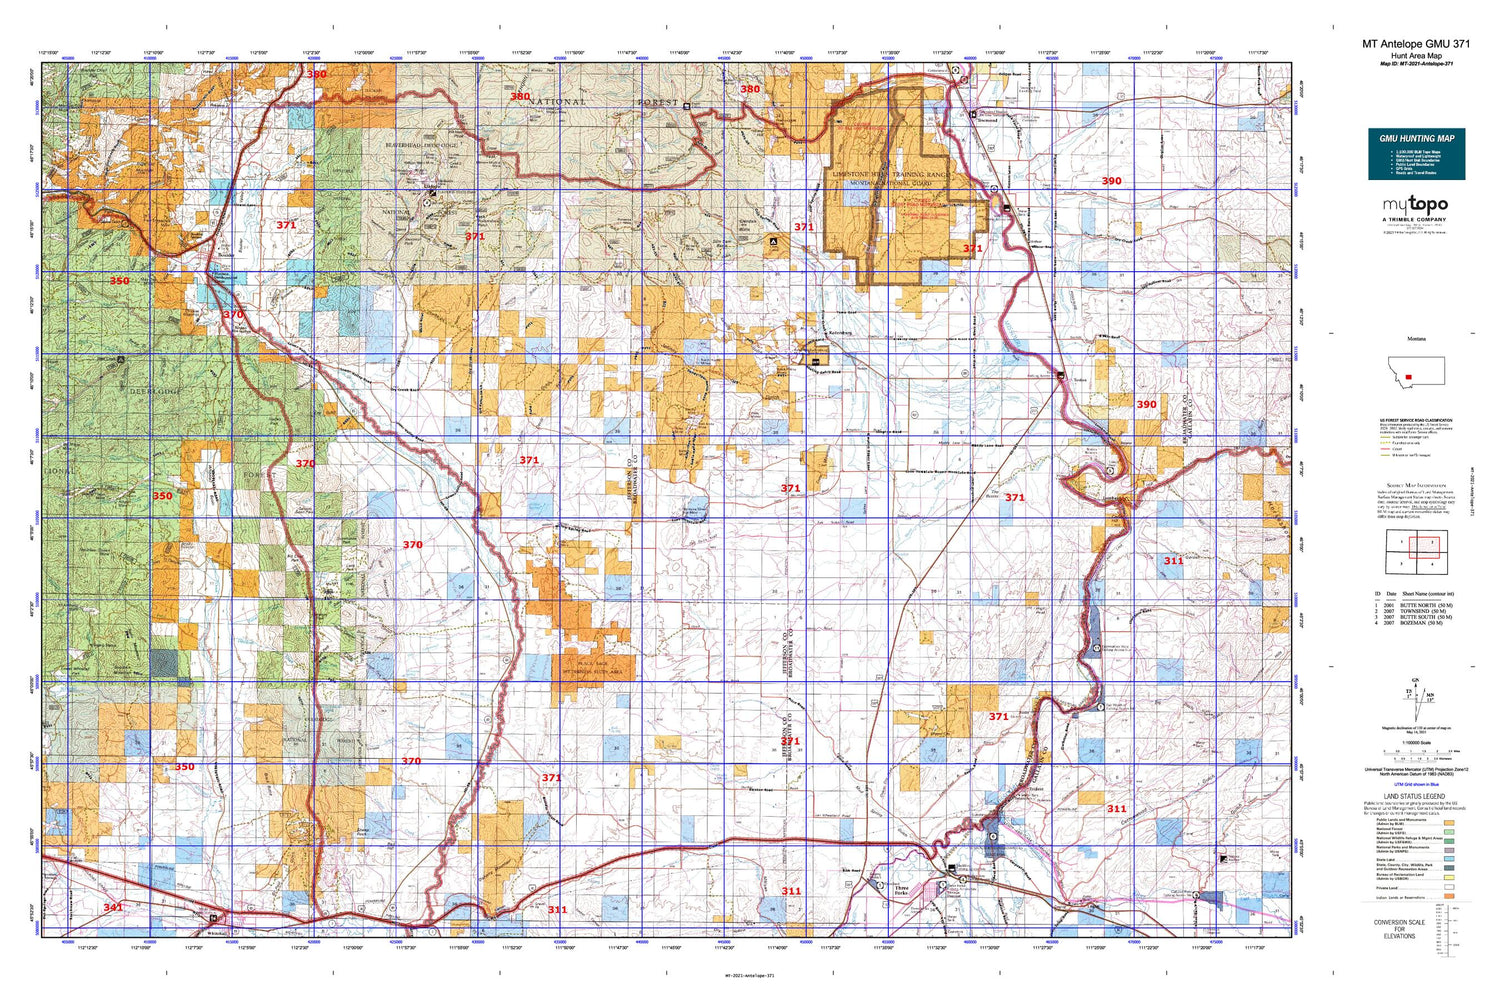 Montana Antelope GMU 371 Map Image